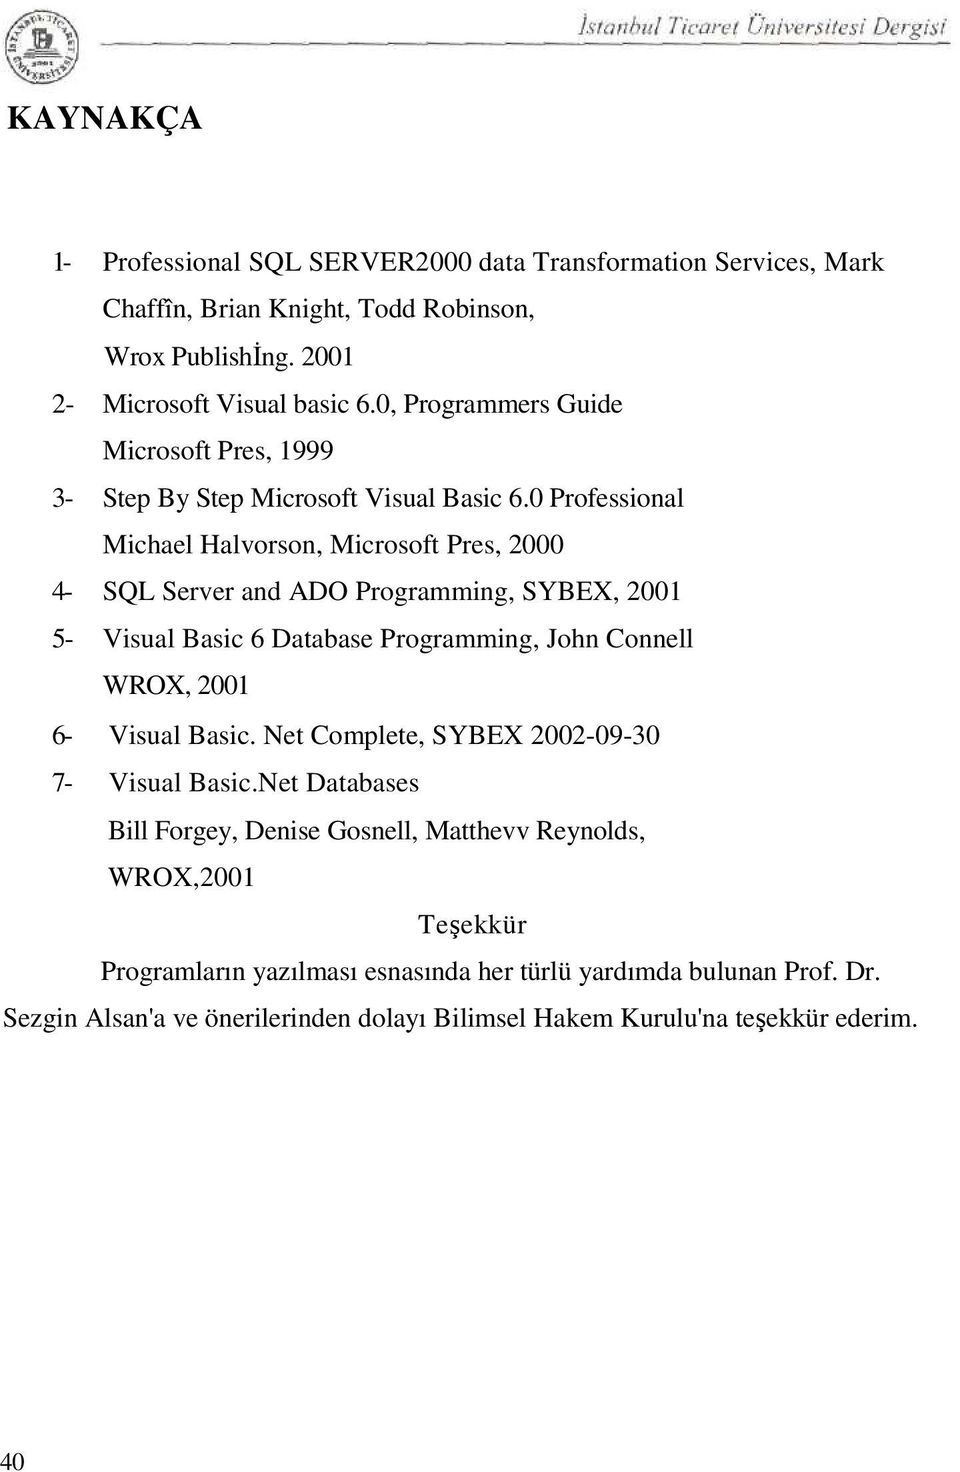 0 Professional Michael Halvorson, Microsoft Pres, 2000 4- SQL Server and ADO Programming, SYBEX, 2001 5- Visual Basic 6 Database Programming, John Connell WROX, 2001 6- Visual